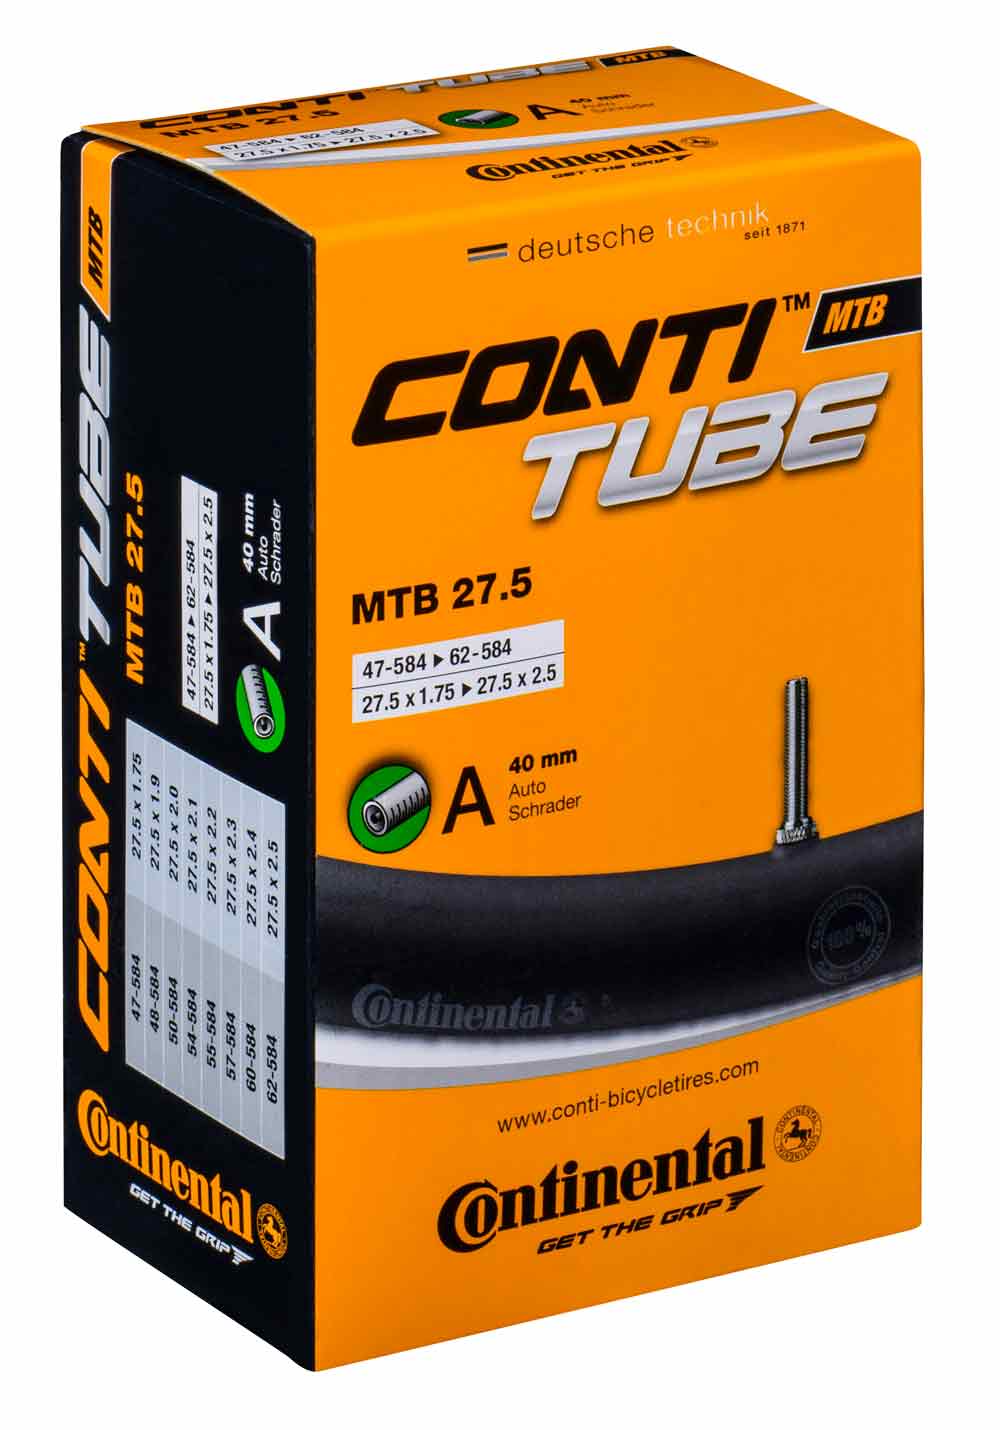 Continental MTB Tube 27.5 - Bild 1